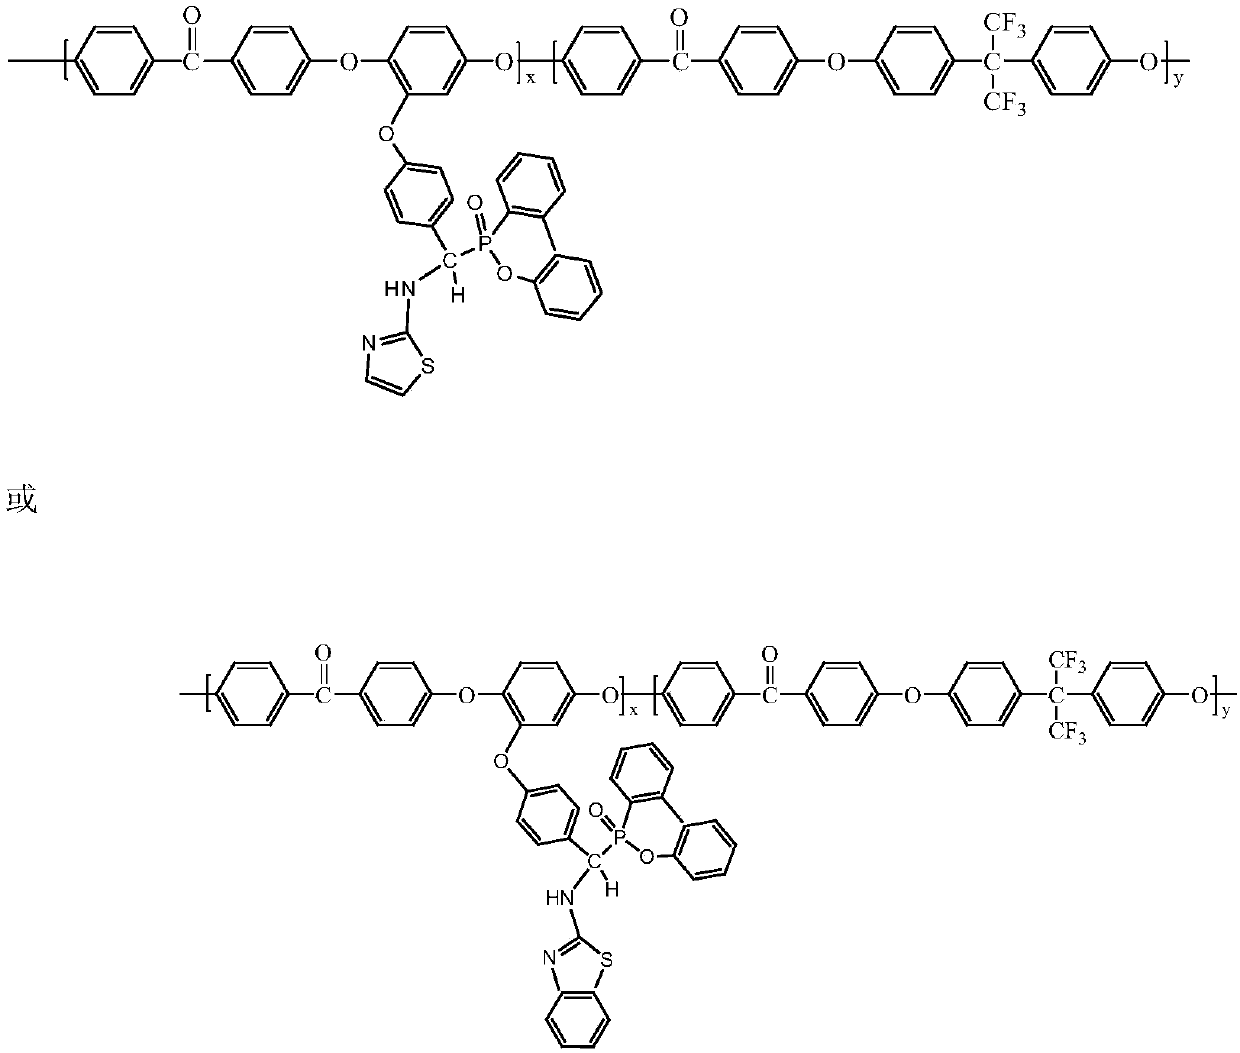 Preparation method of 9,10-dihydro-9-oxa-10-phosphaphenanthrene 10-oxide (DOPO) side group polyaryletherketone containing ternary flame-retardant material